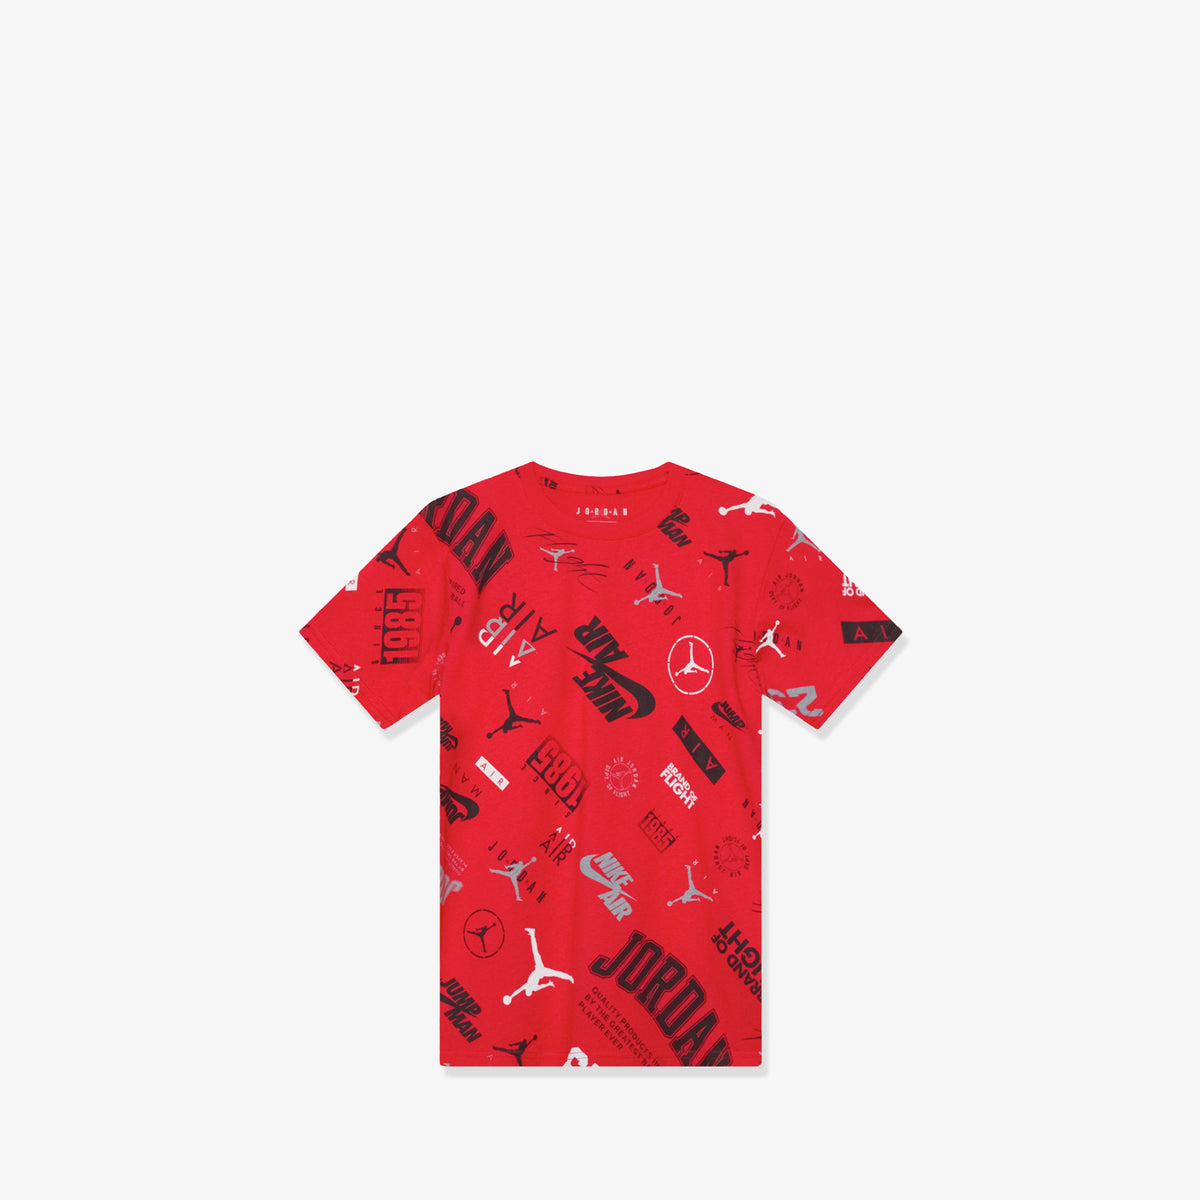 Jordan Jumpman Level Graphic Toddler T-Shirt - Red